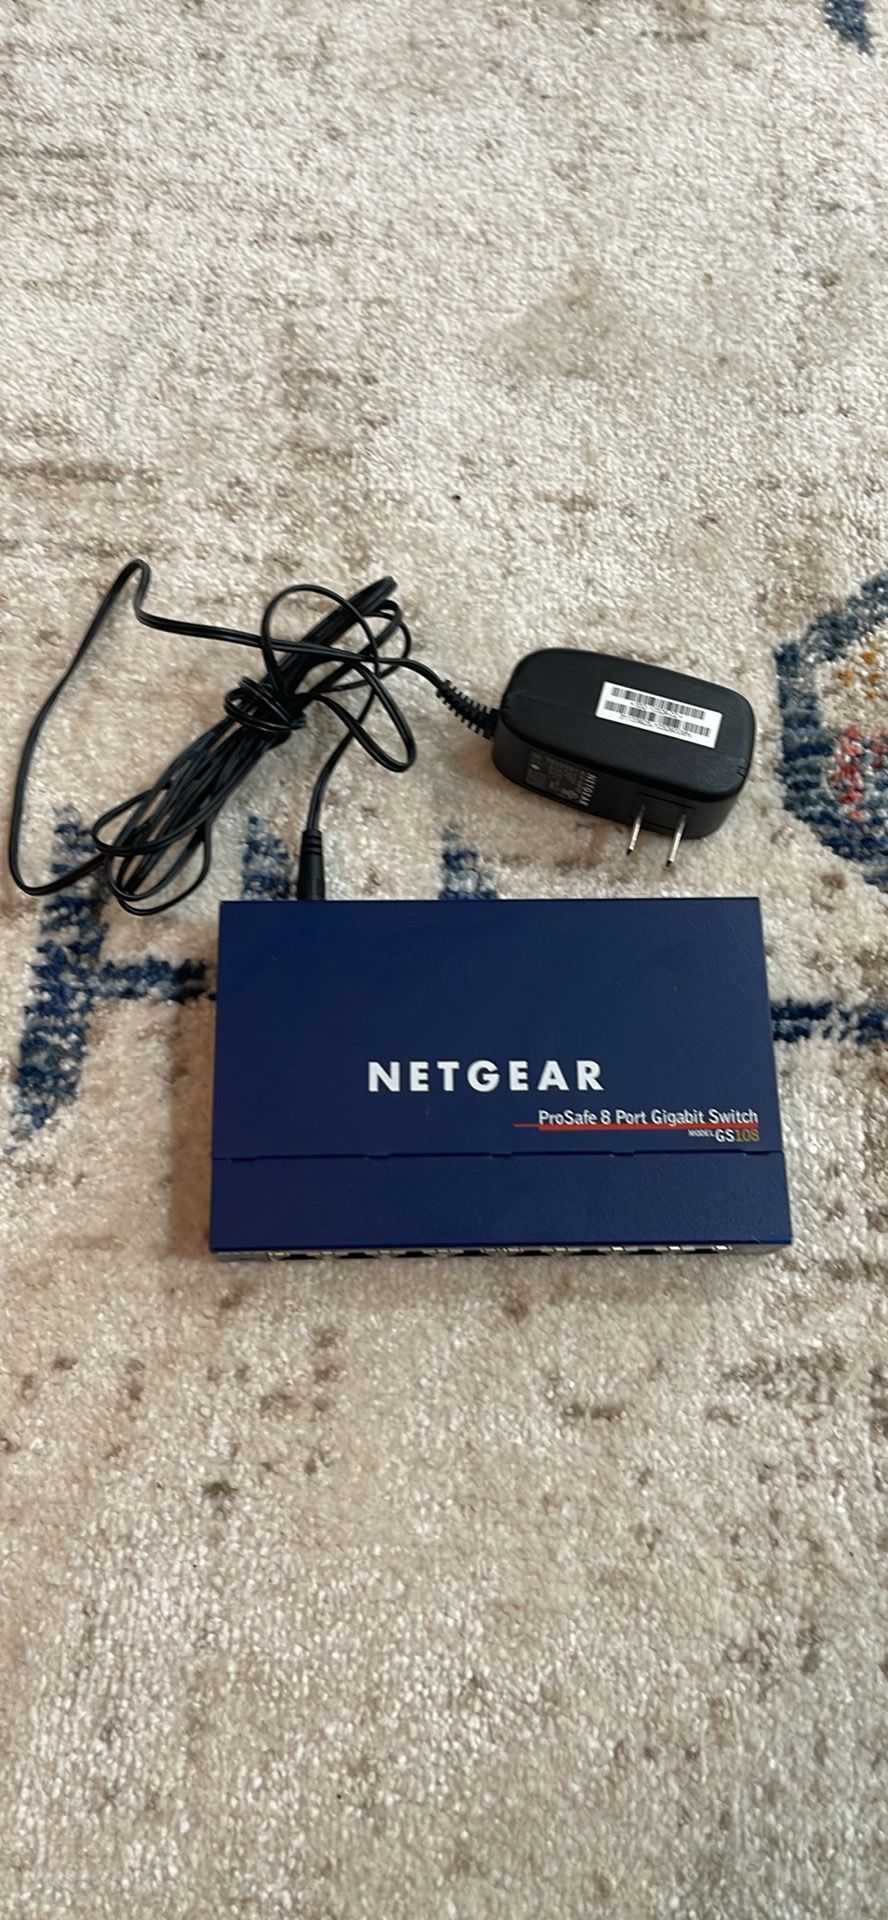 NETGEAR 8-Port Gigabit Ethernet Unmanaged Switch (GS108) - Desktop or Wall Mount, and Limited Lifetime 